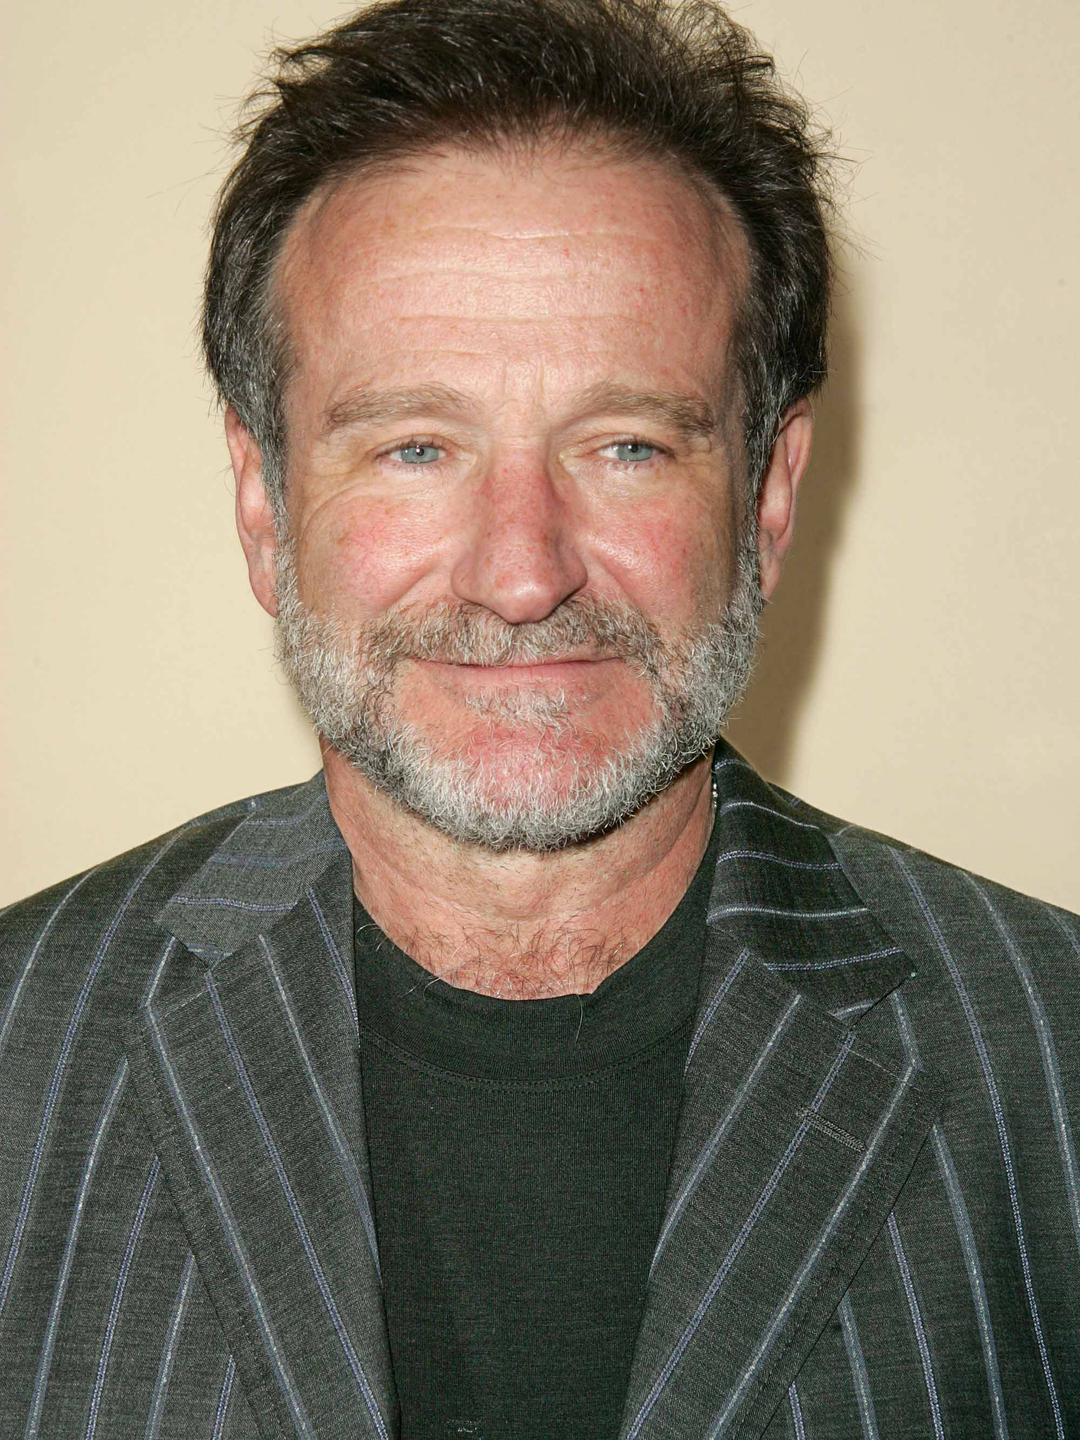 Robin Williams city of birth